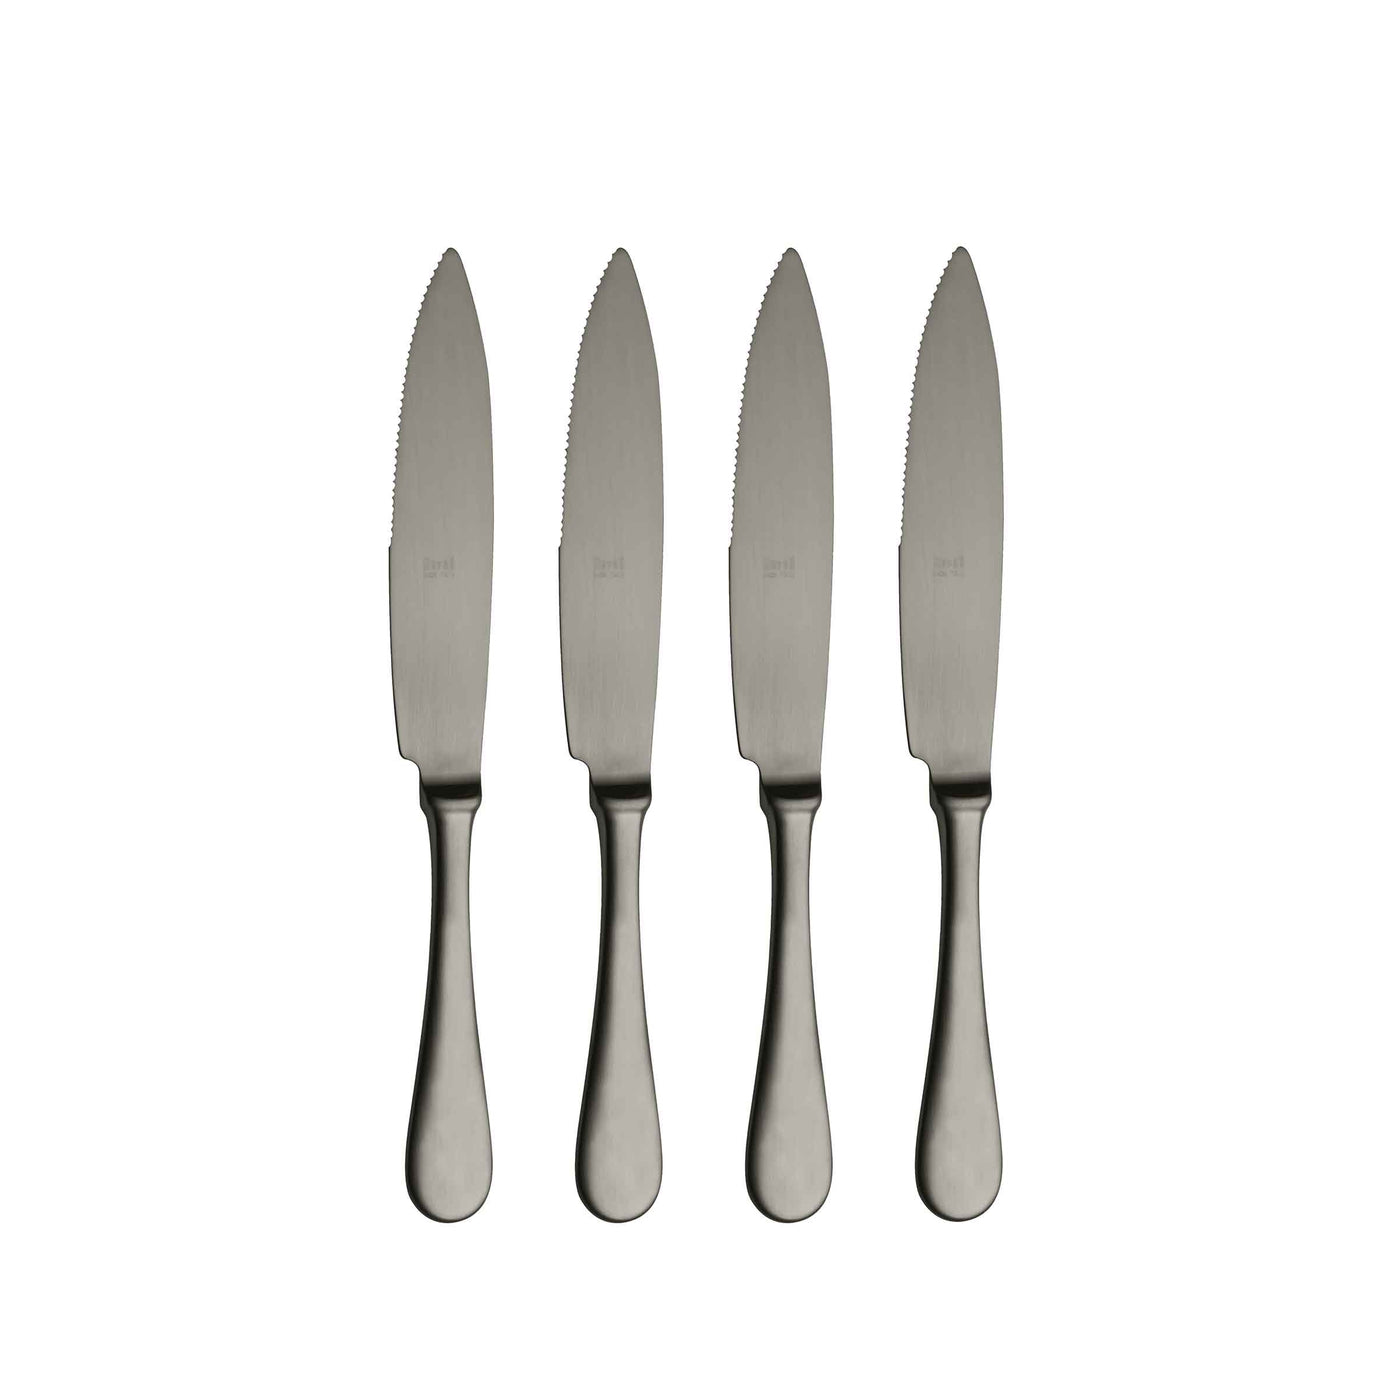 Stainless Steel STEAK KNIFE Set of Four by Mepra 06